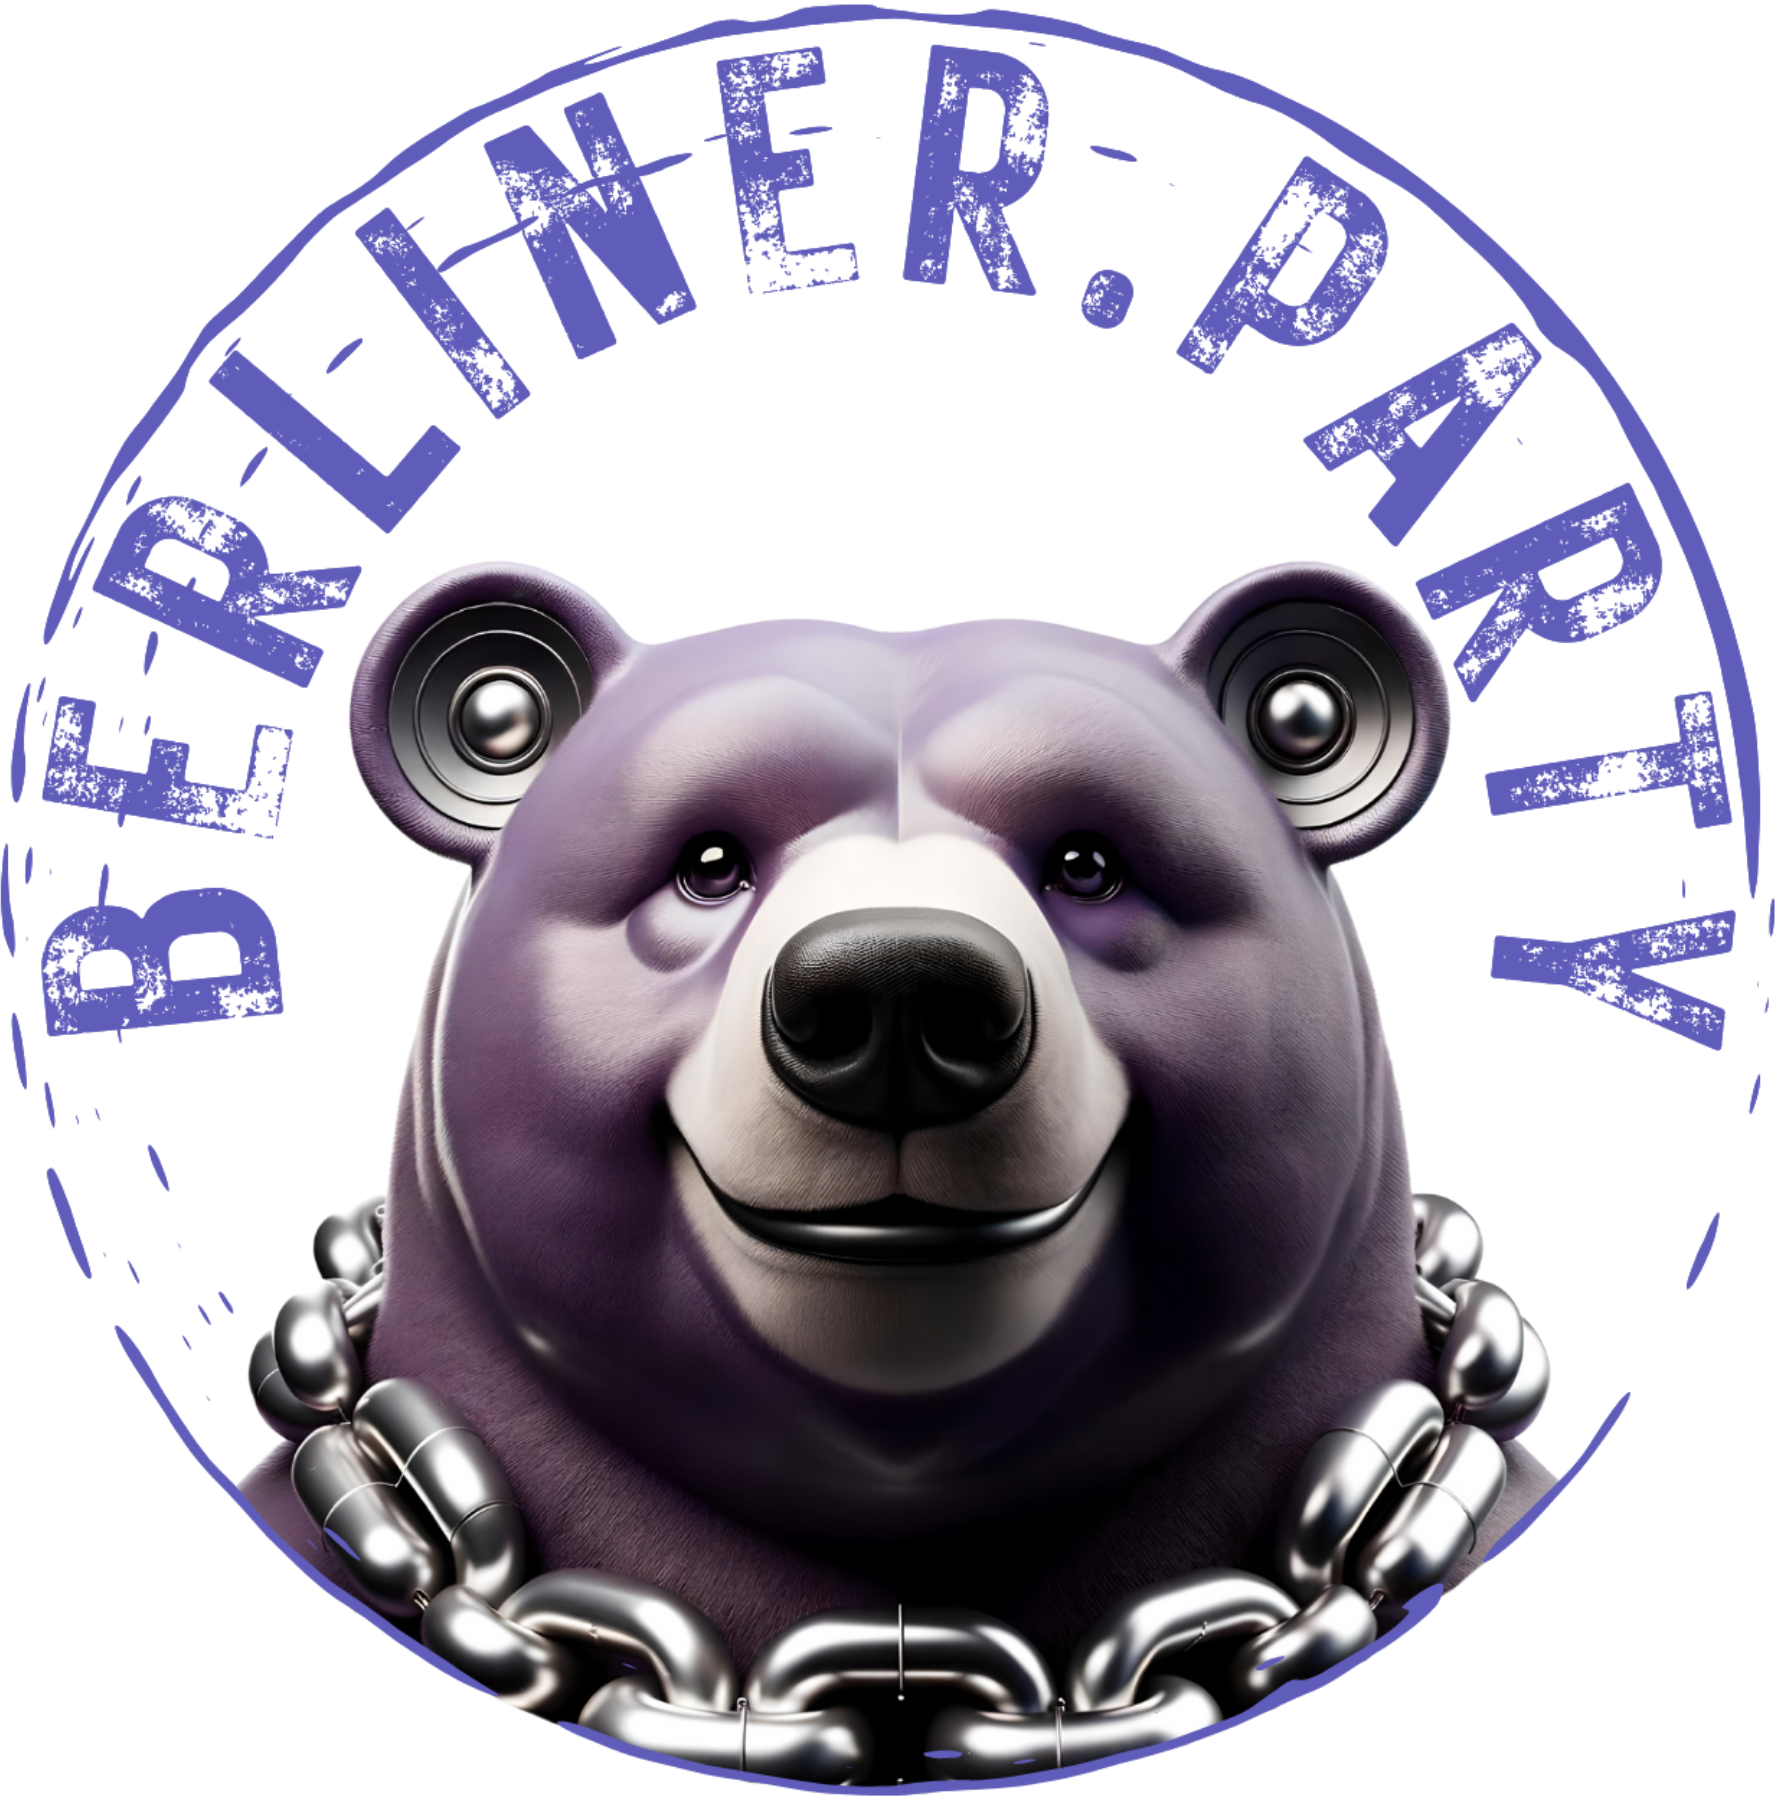 Berliner.party logo including berlin party bear